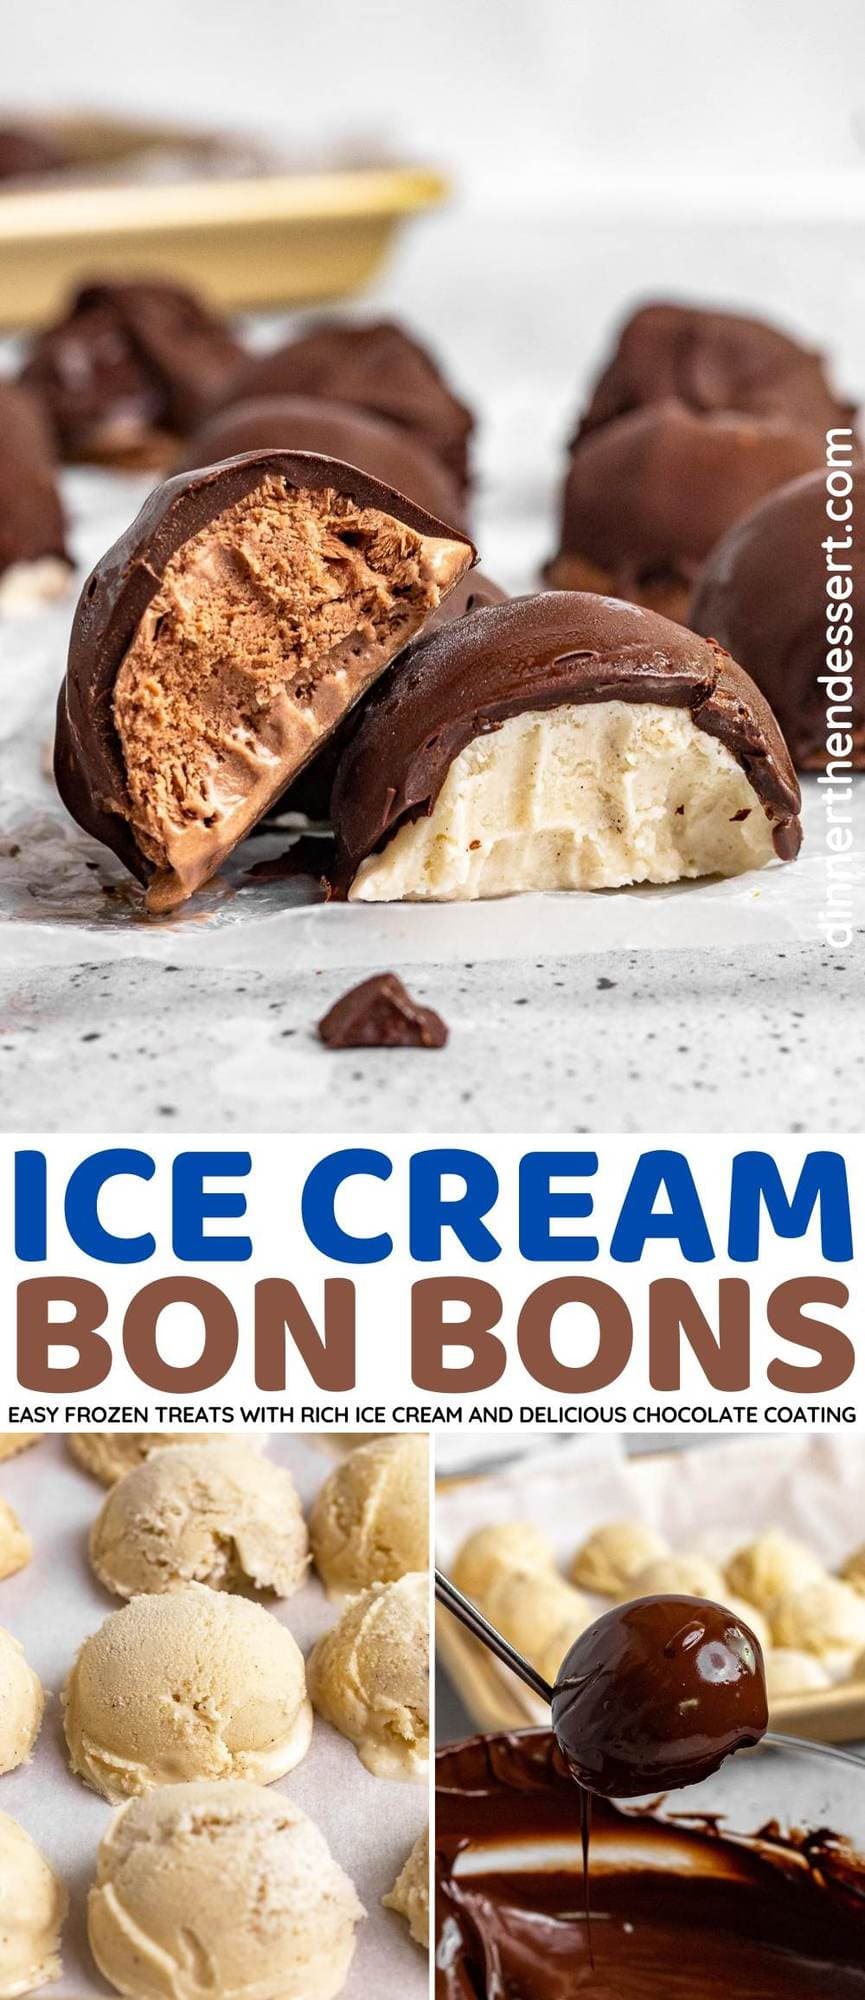 Ice Cream Bon Bons collage